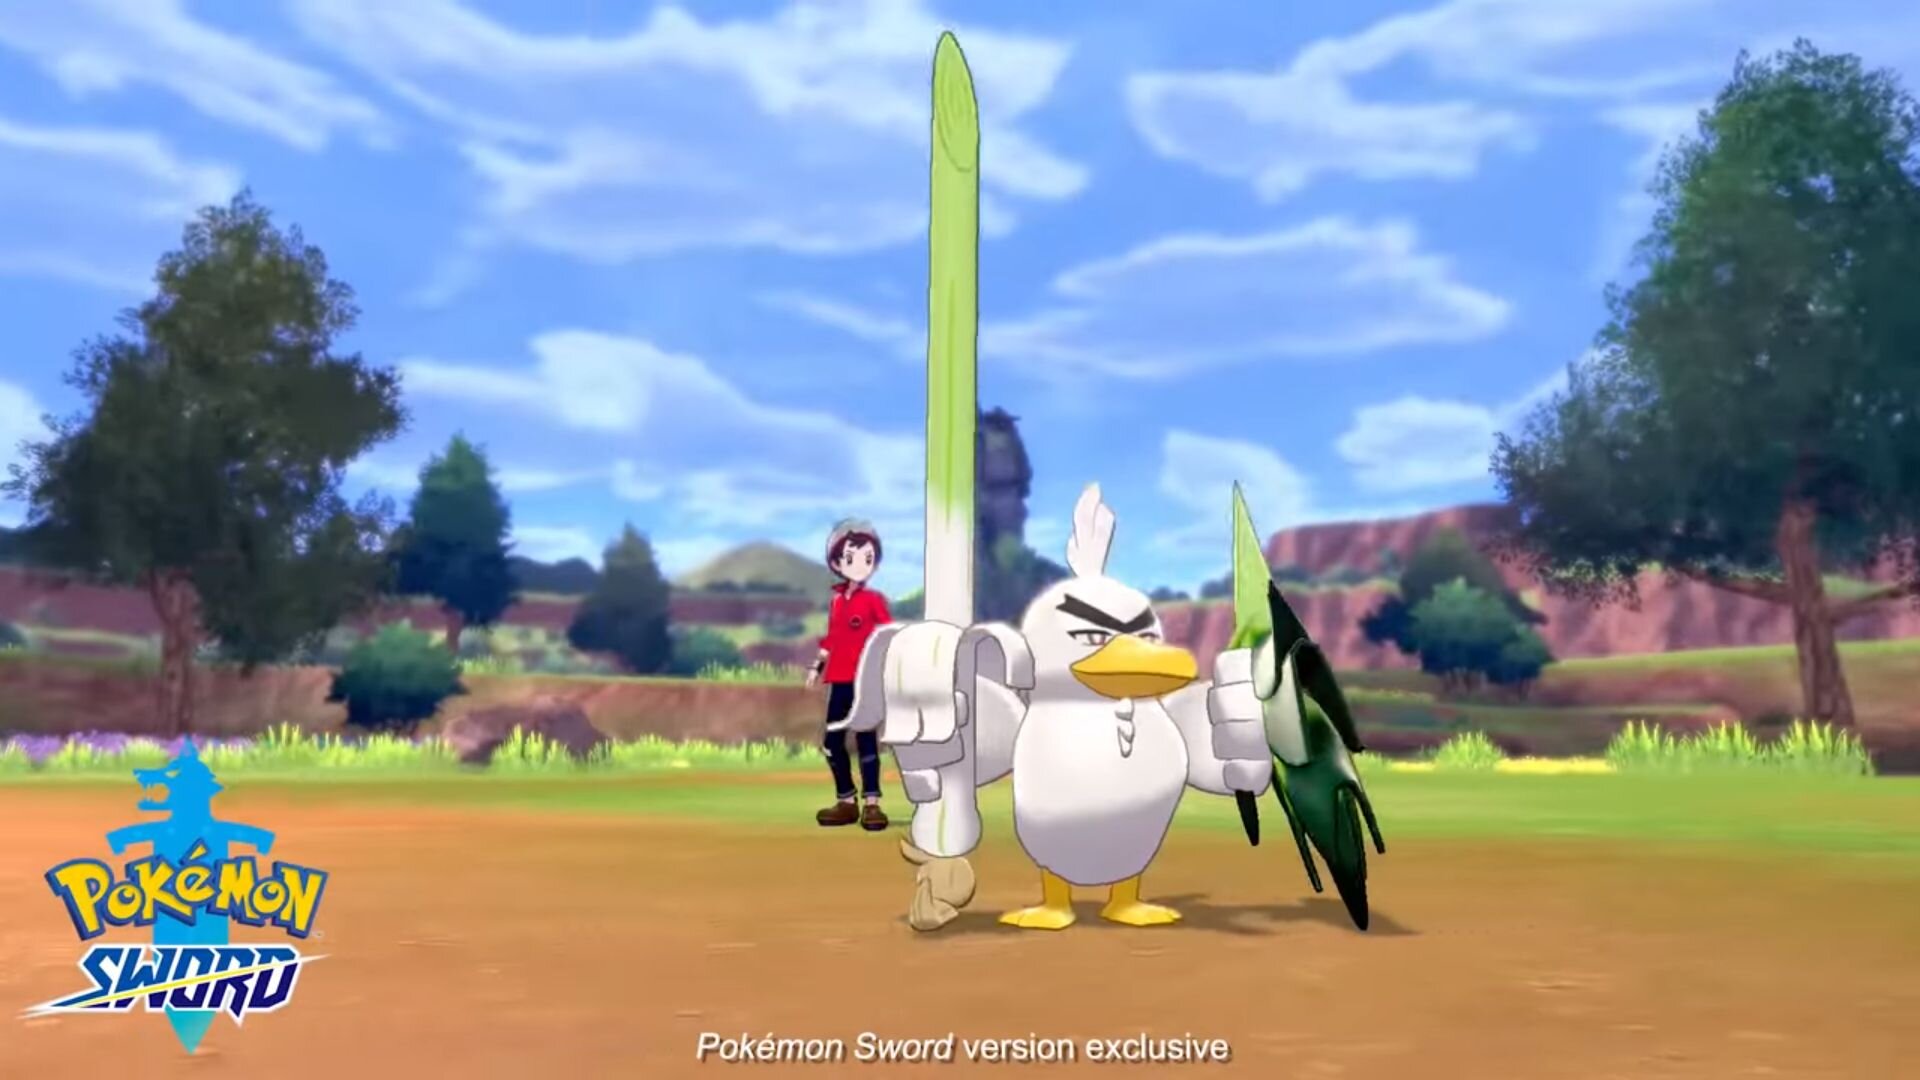 Pokémon Sword: The Best Way To Evolve A Farfetch'd Into Sirfetch'd